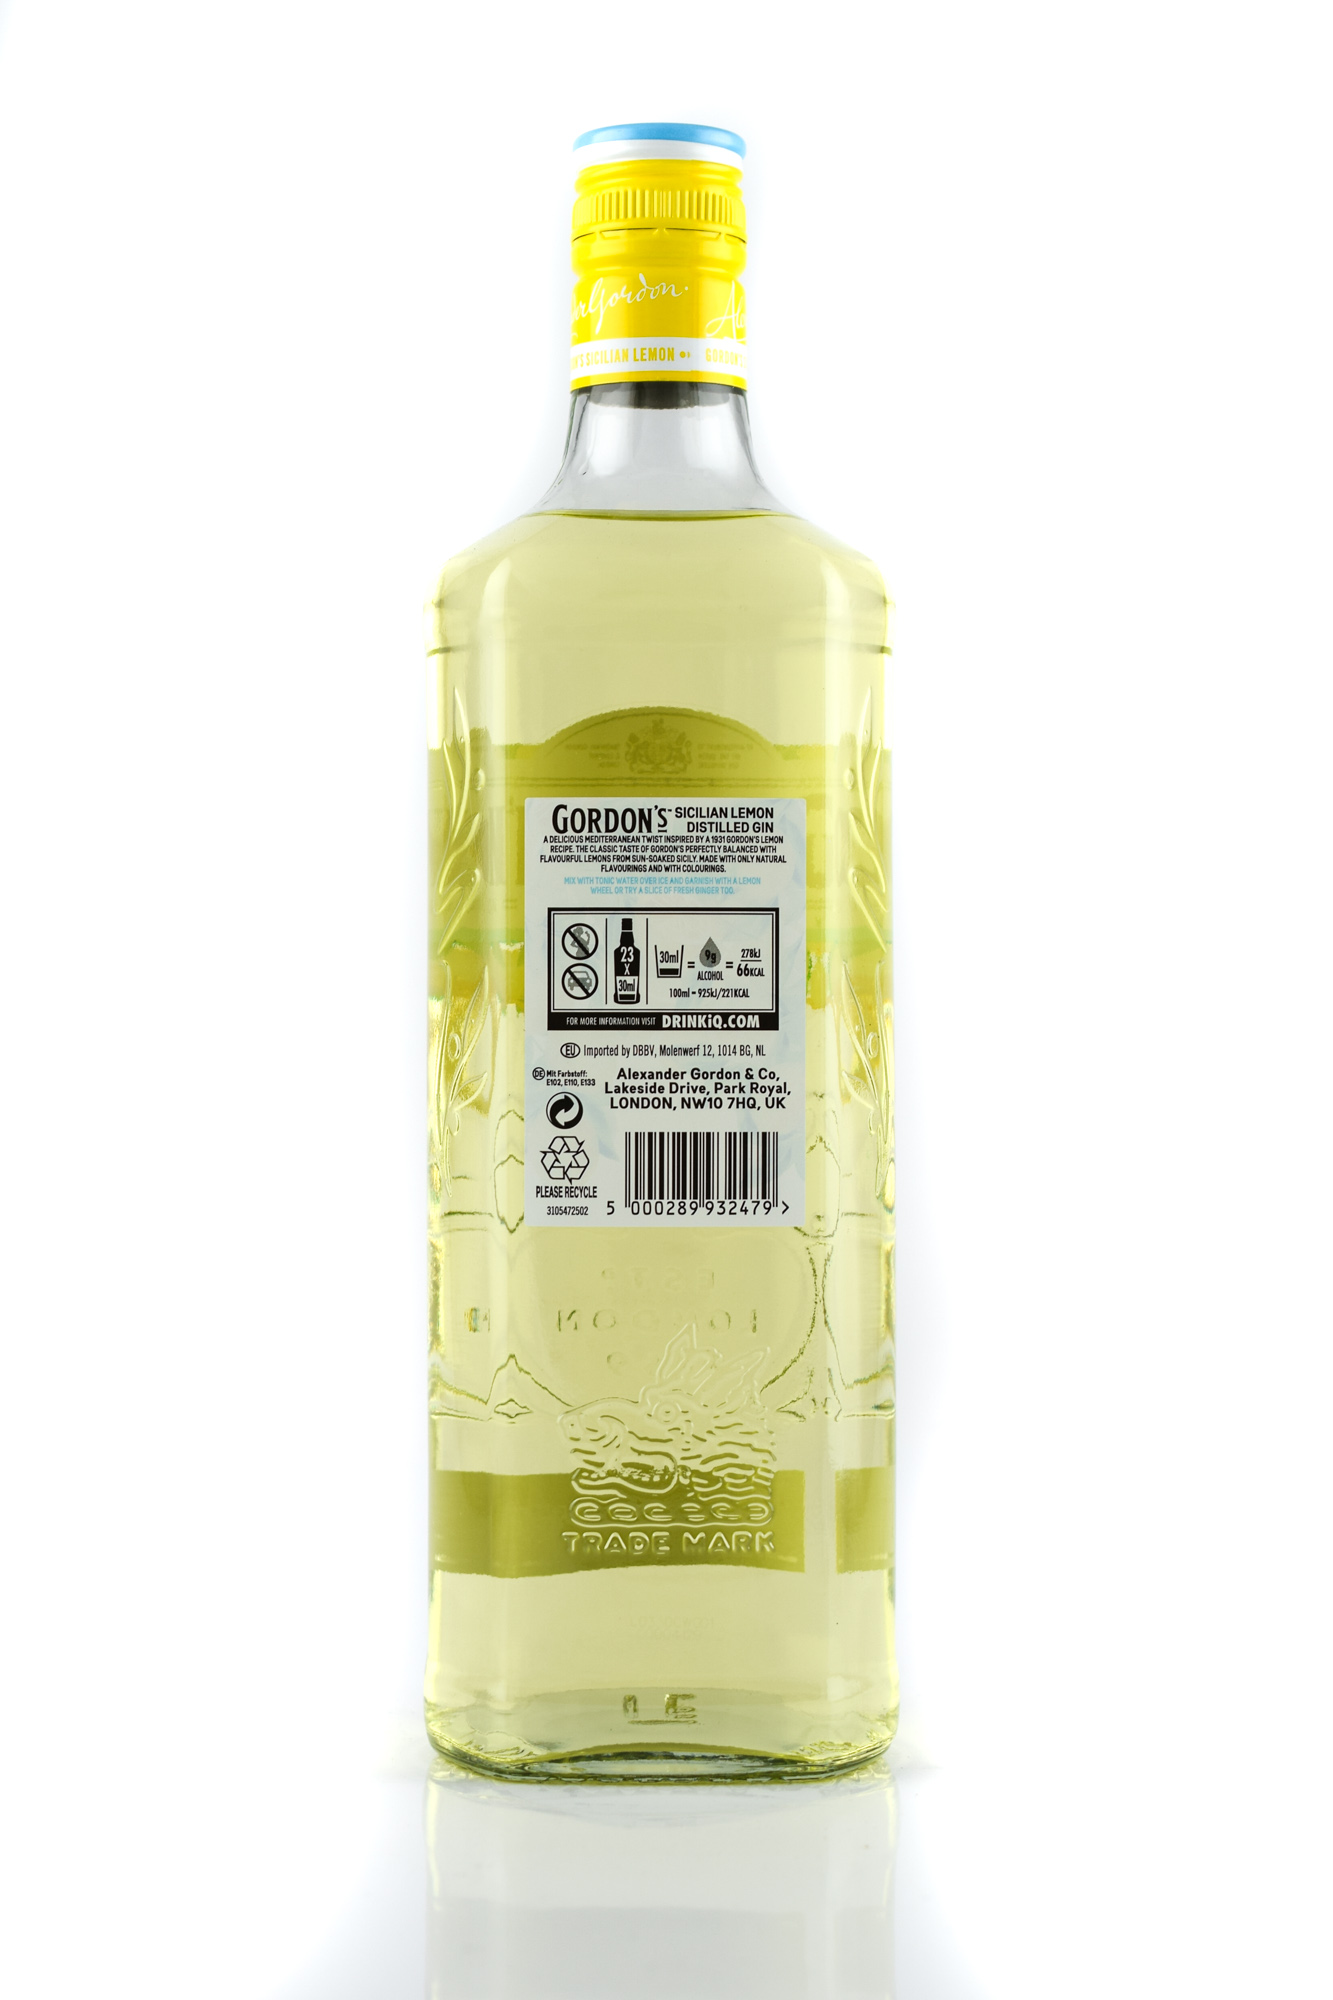 Gordon's Sicilian Lemon Gin at Home of Malts >> explore now! | Home of Malts